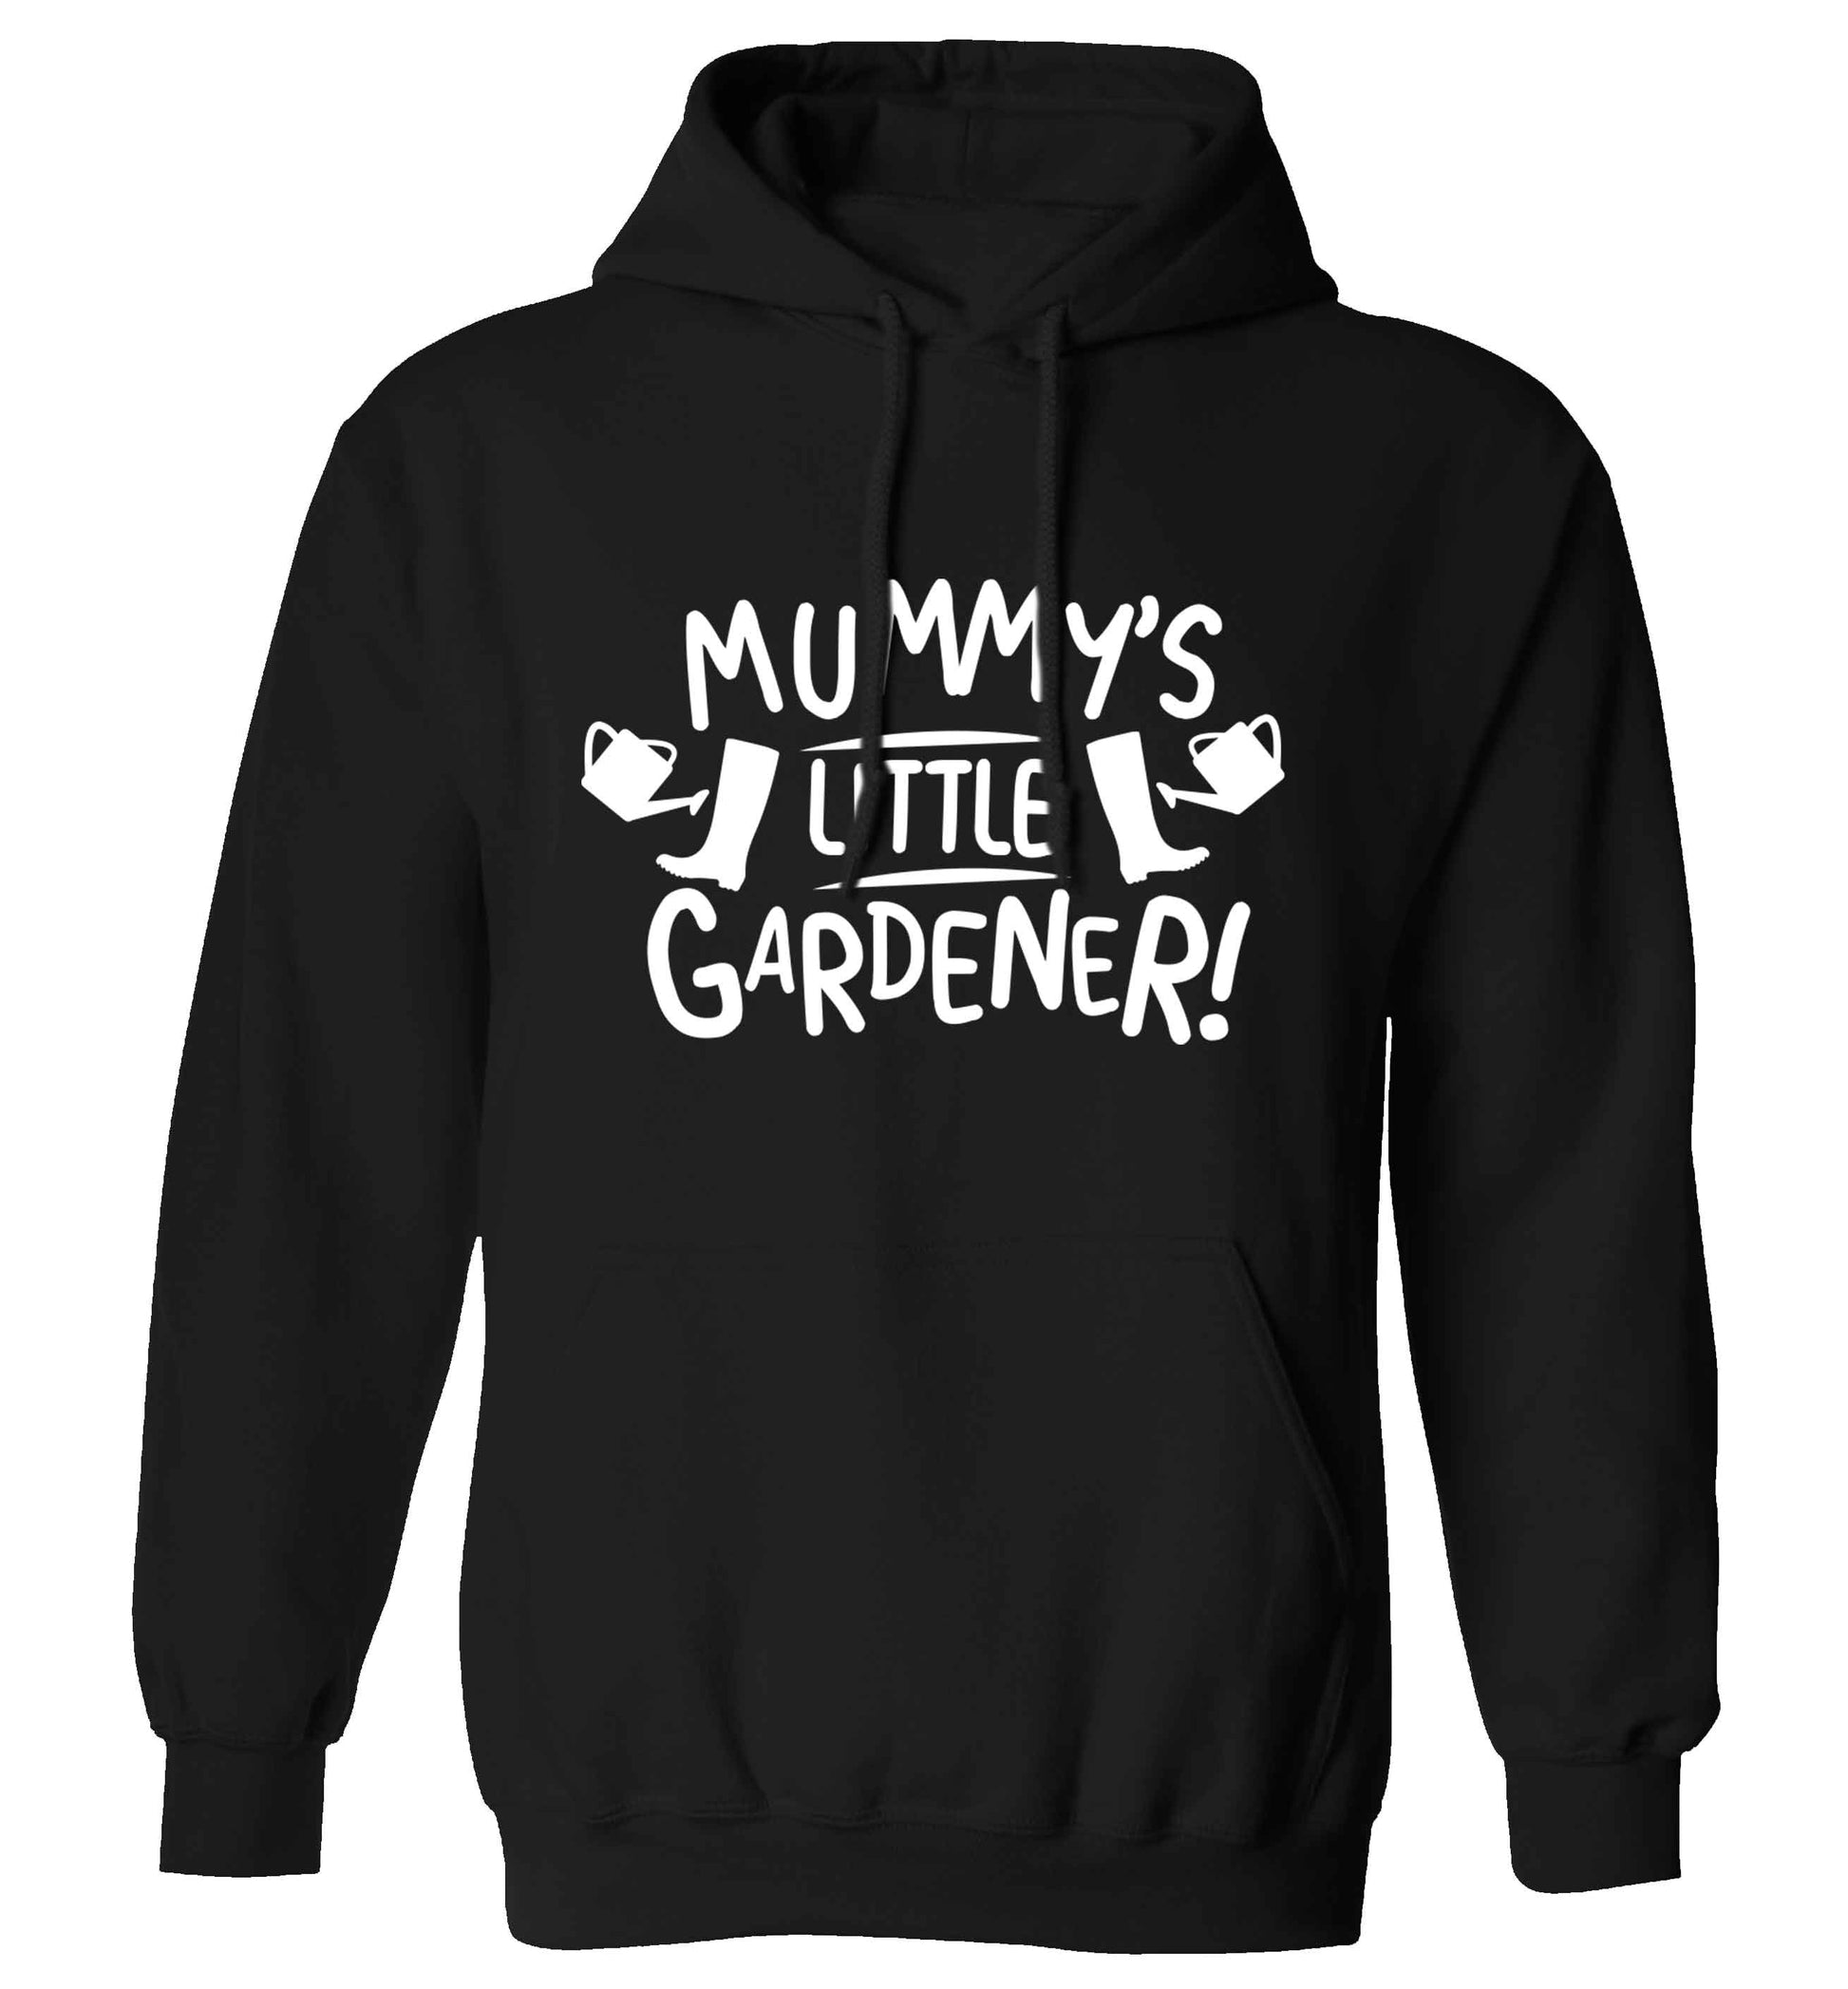 Mummy's little gardener adults unisex black hoodie 2XL